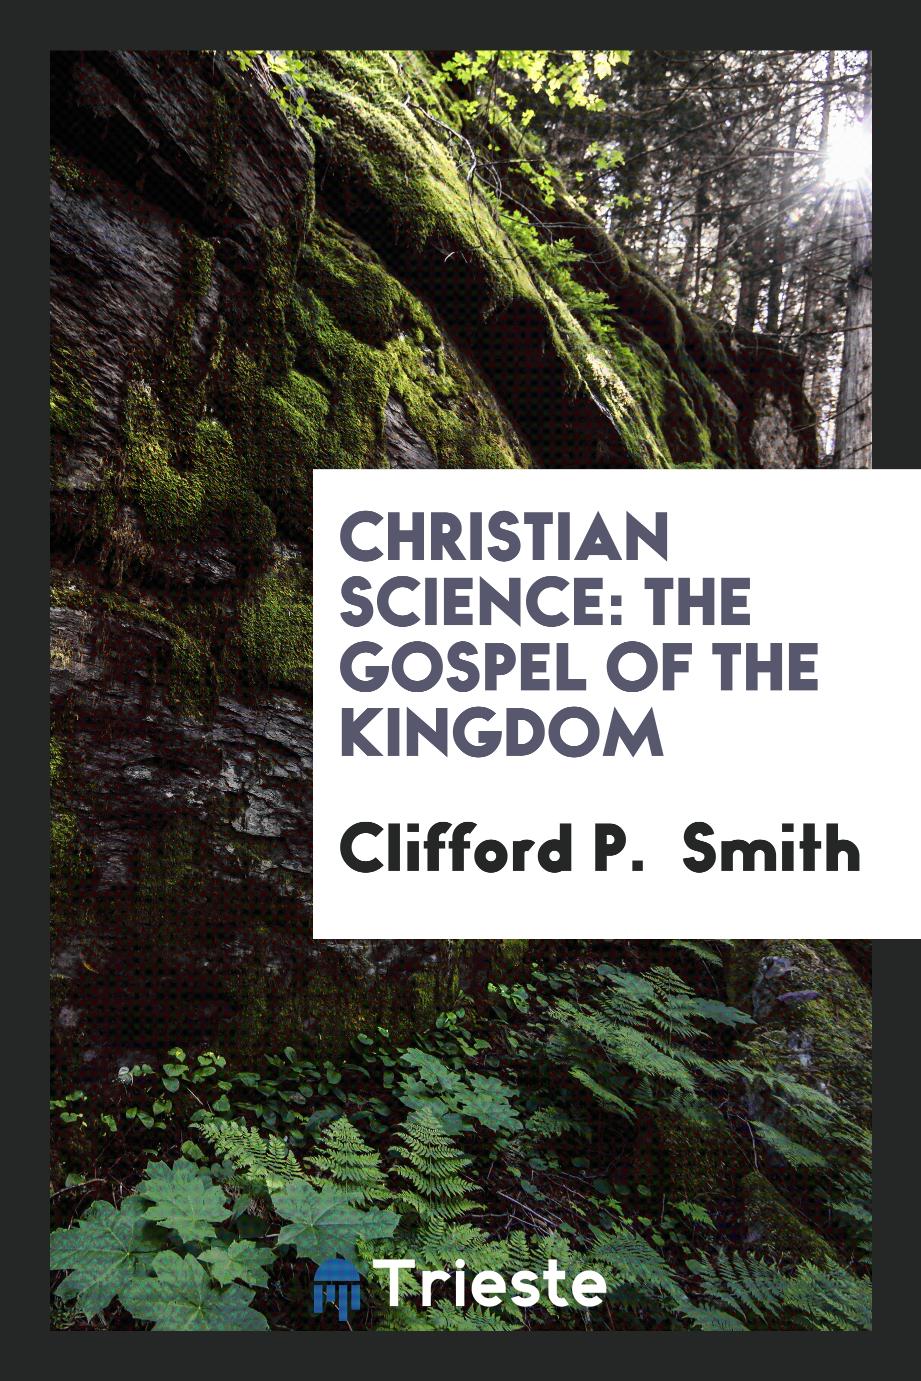 Christian science: The Gospel of the kingdom